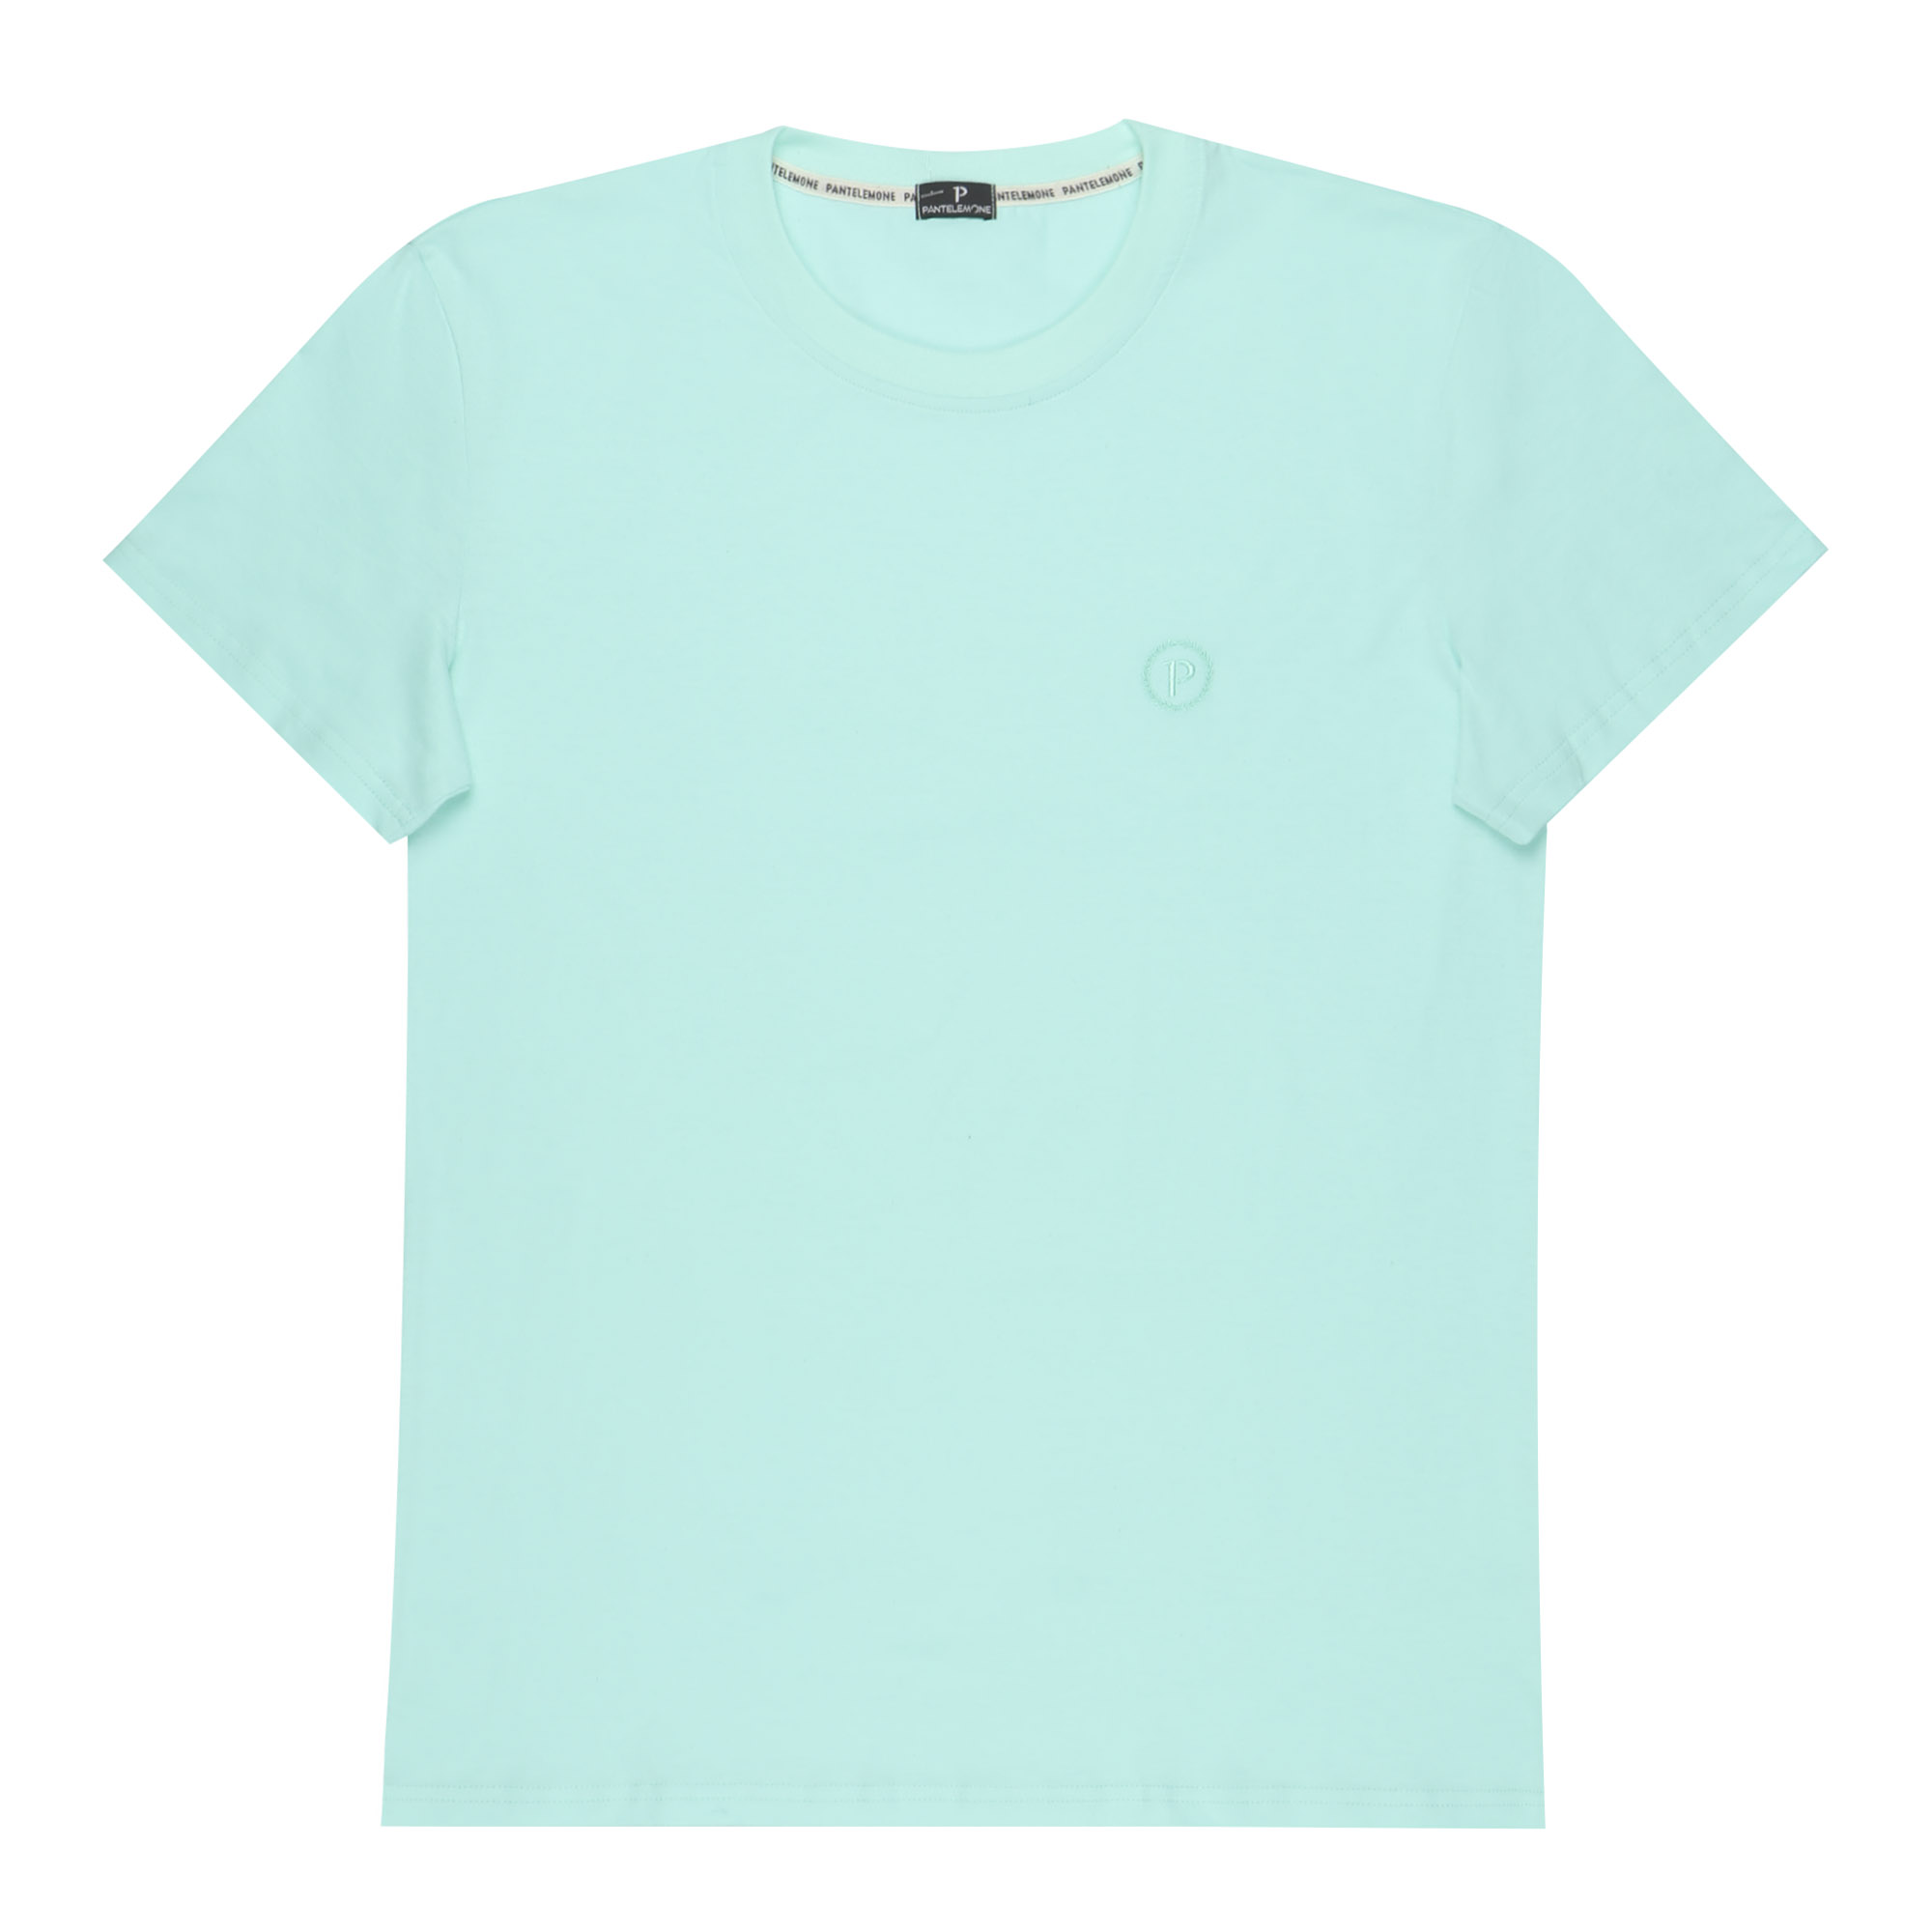 Мужская футболка Pantelemone MF-913 52 ментоловая, цвет ментоловый, размер 52 - фото 1